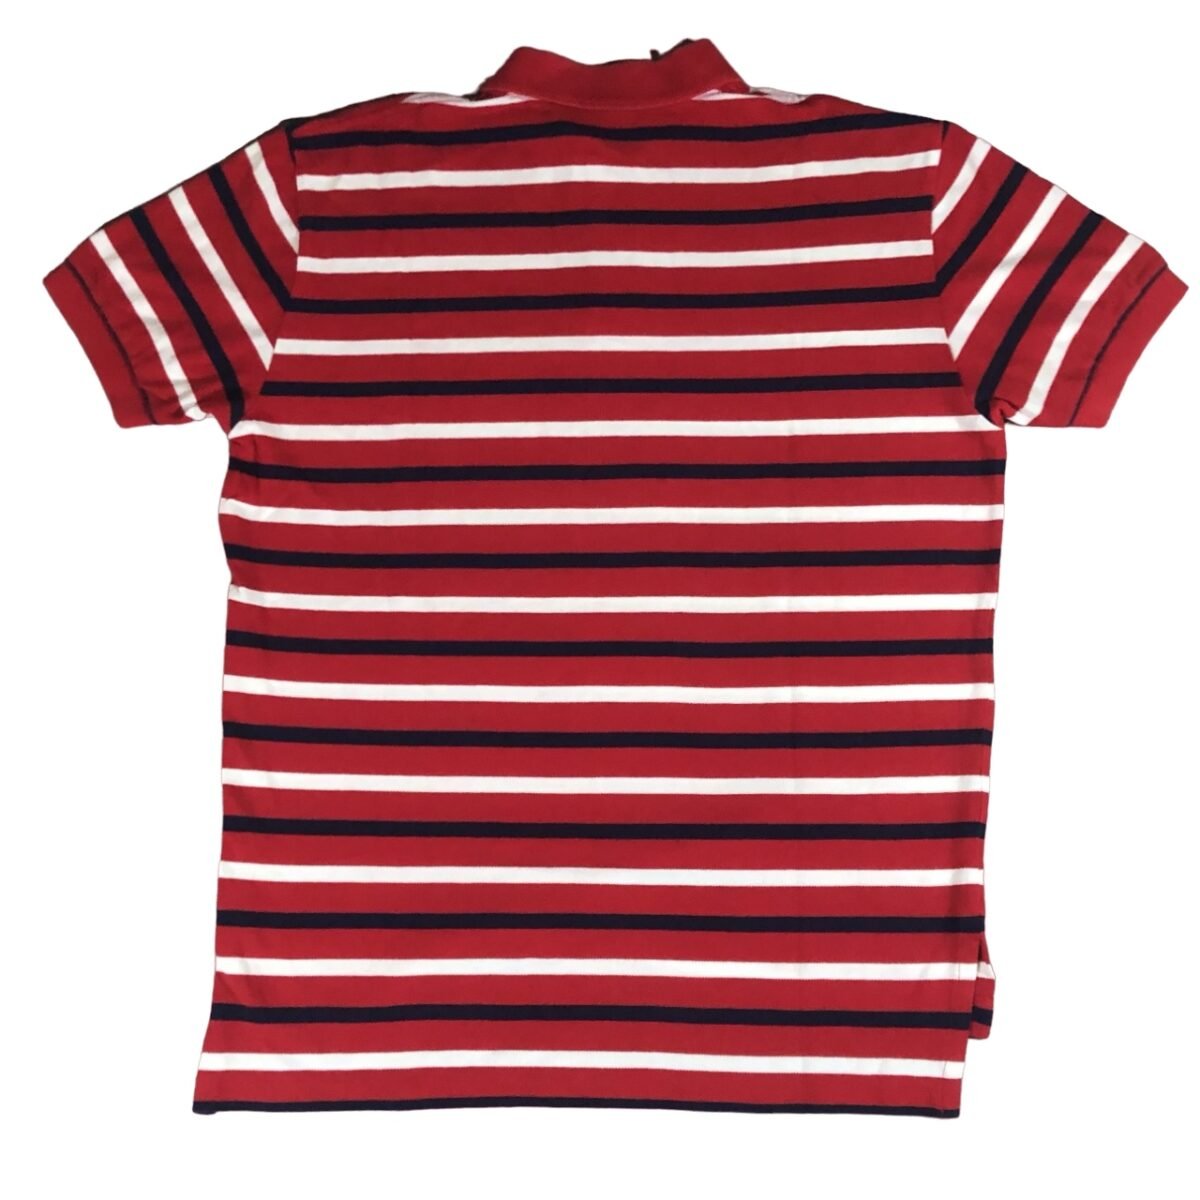 Polo Ralph Lauren red stripes white black